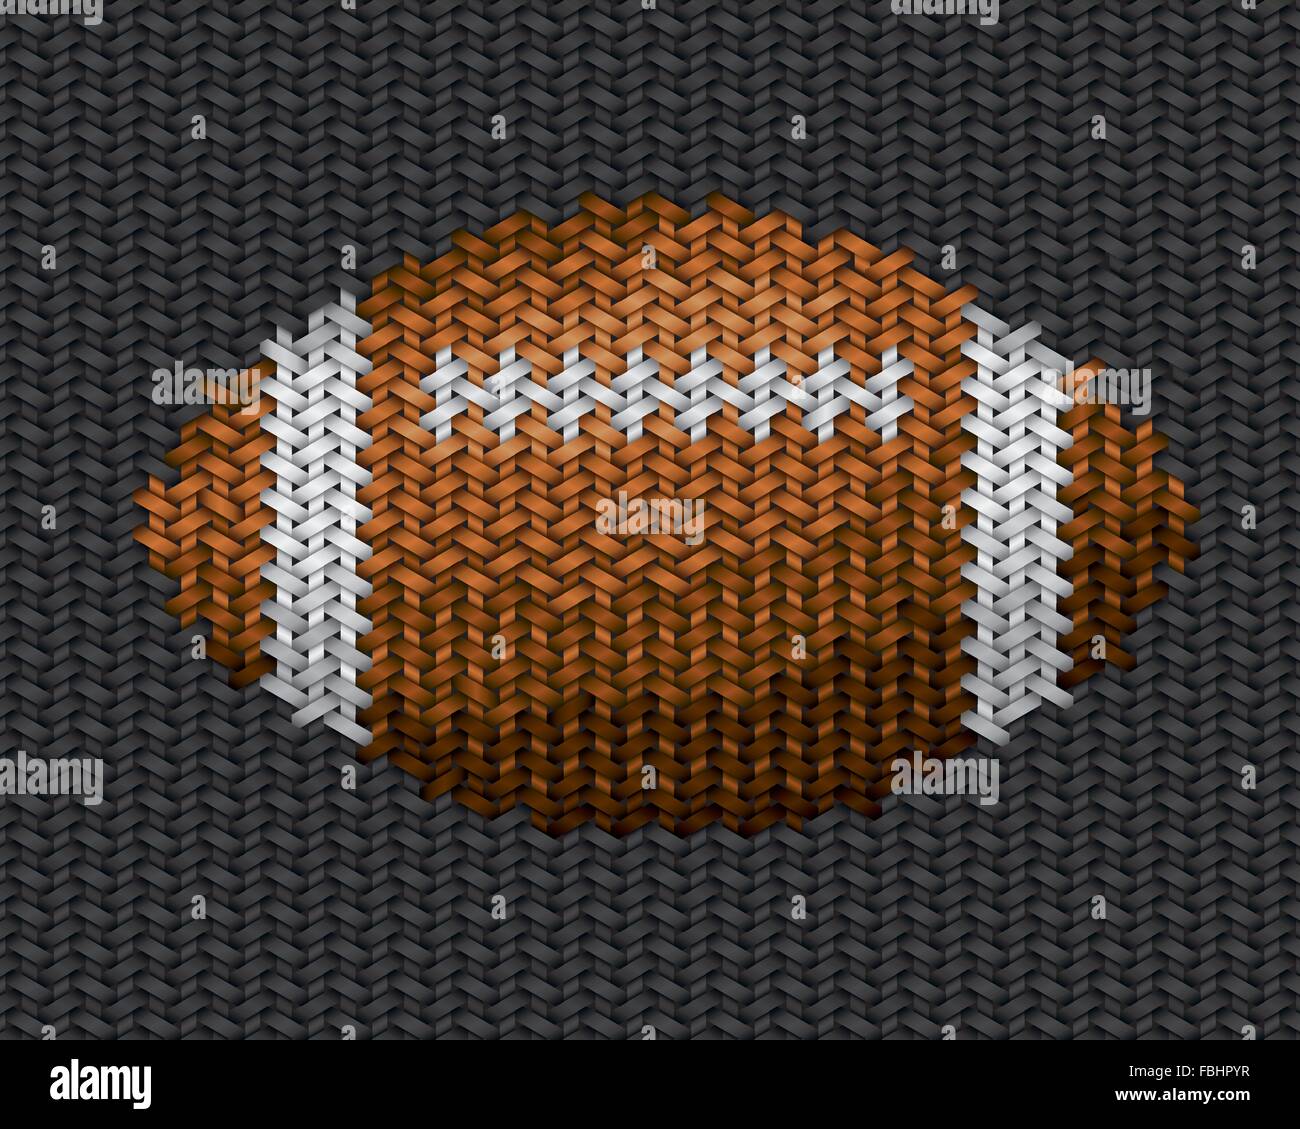 US-amerikanischer American-Football Ball Stickerei Handarbeit auf Stoff Stock Vektor